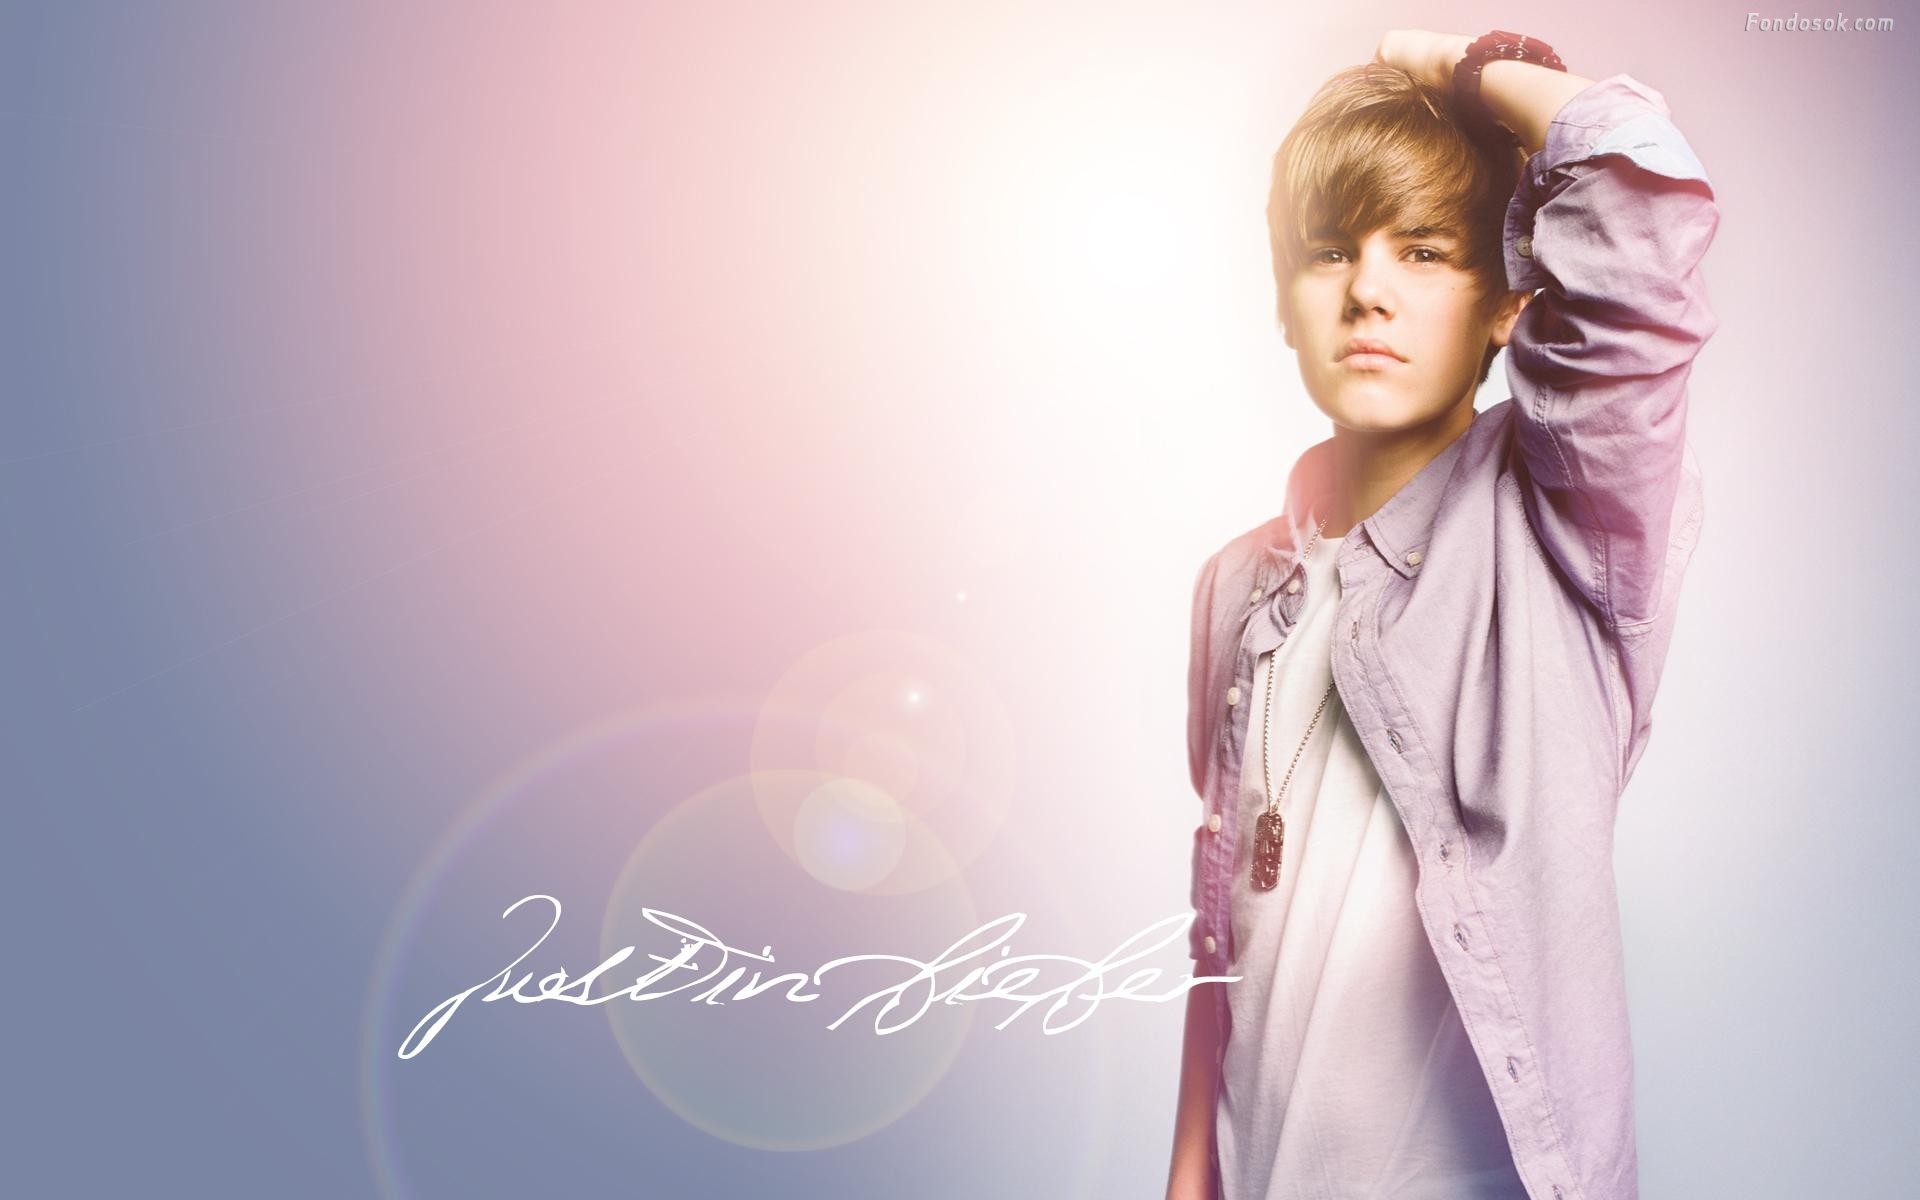 HD Wallpapers of Justin Bieber